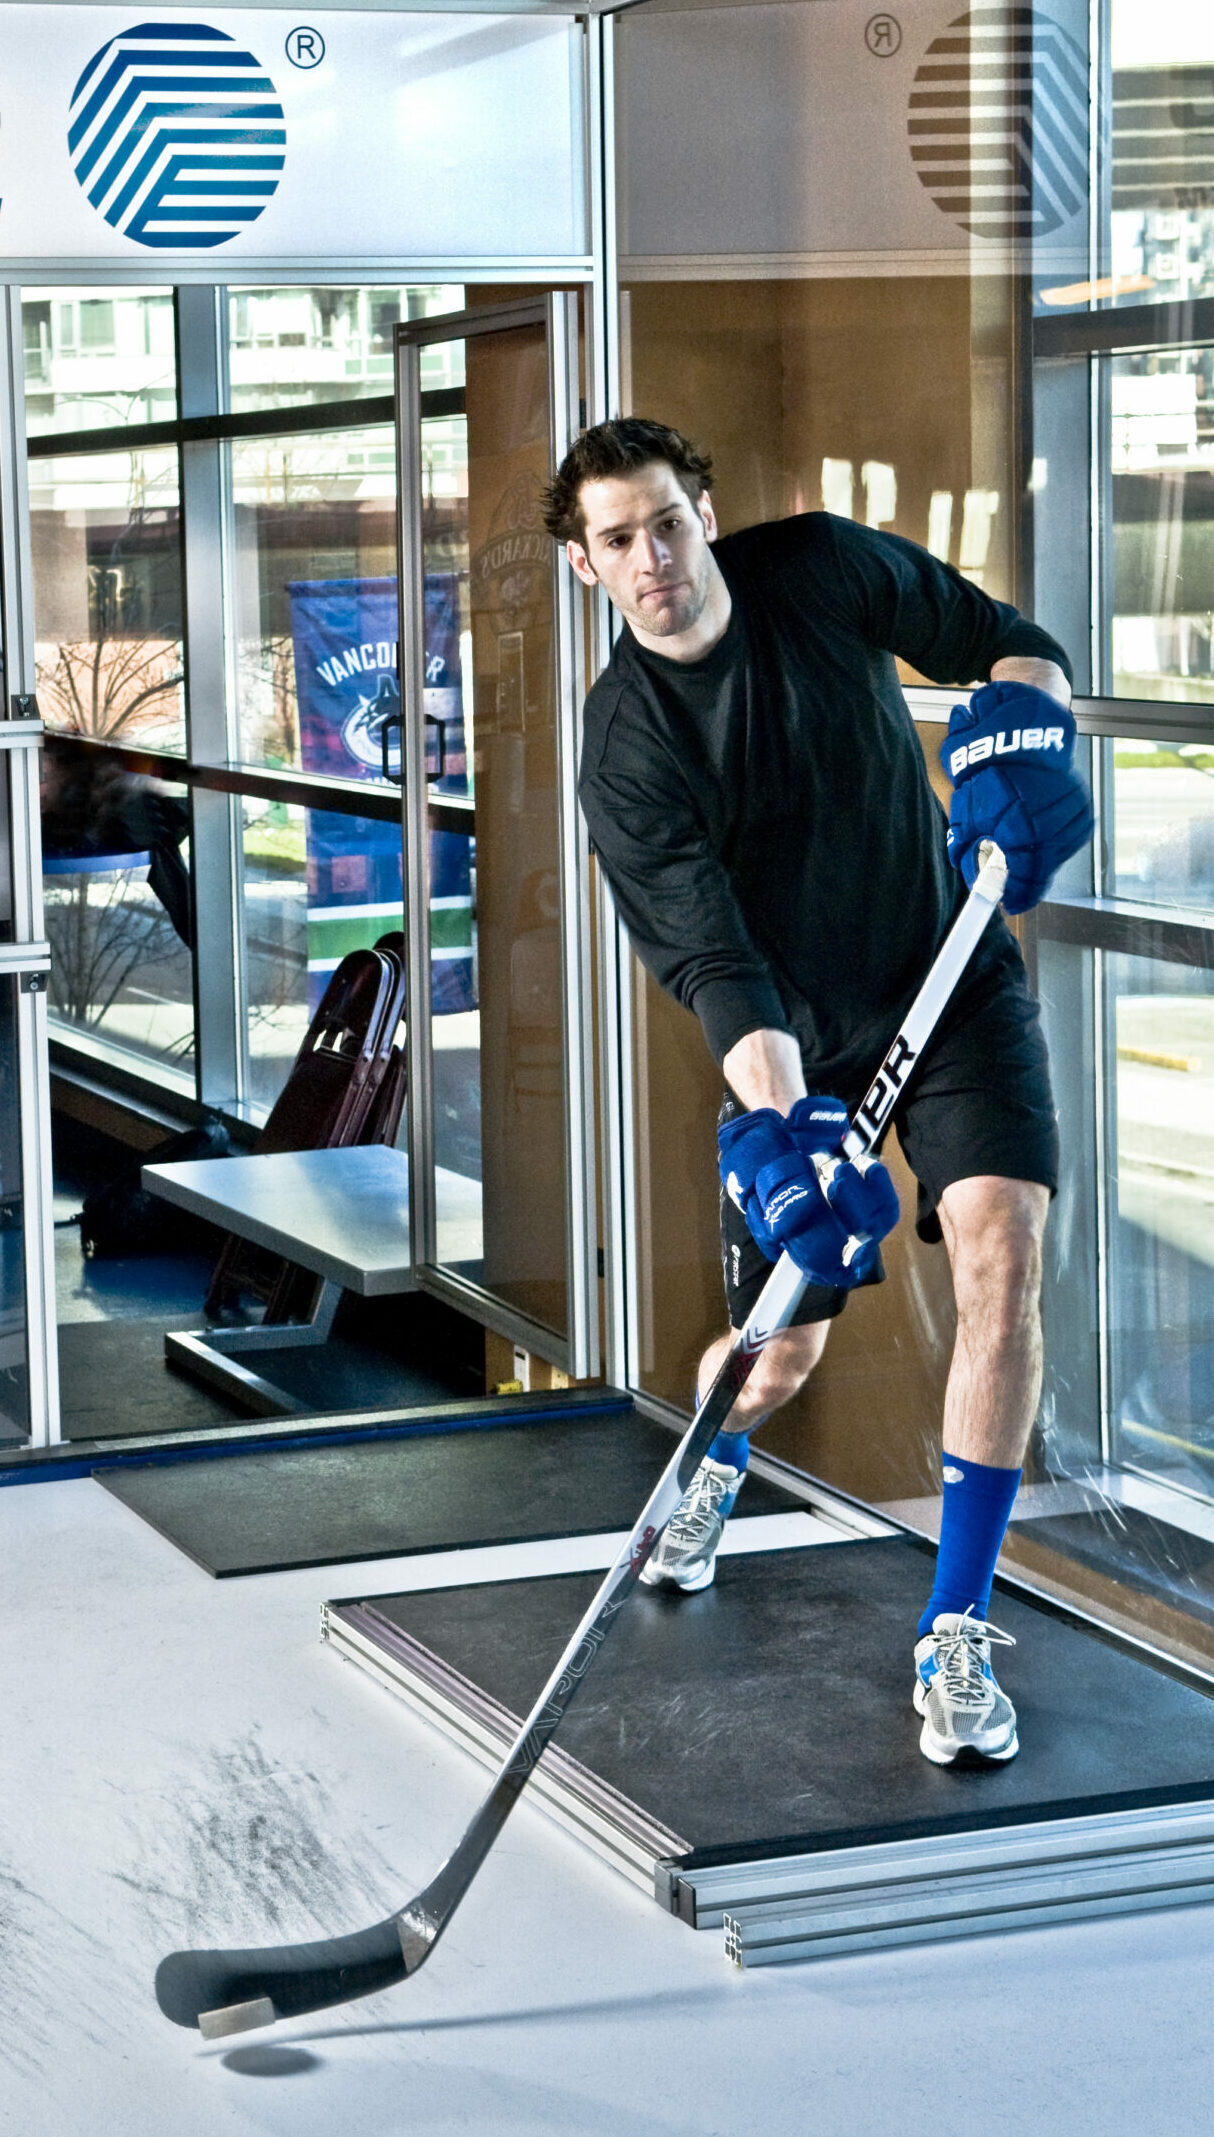 Hockey player using the RapidShot hockey training system